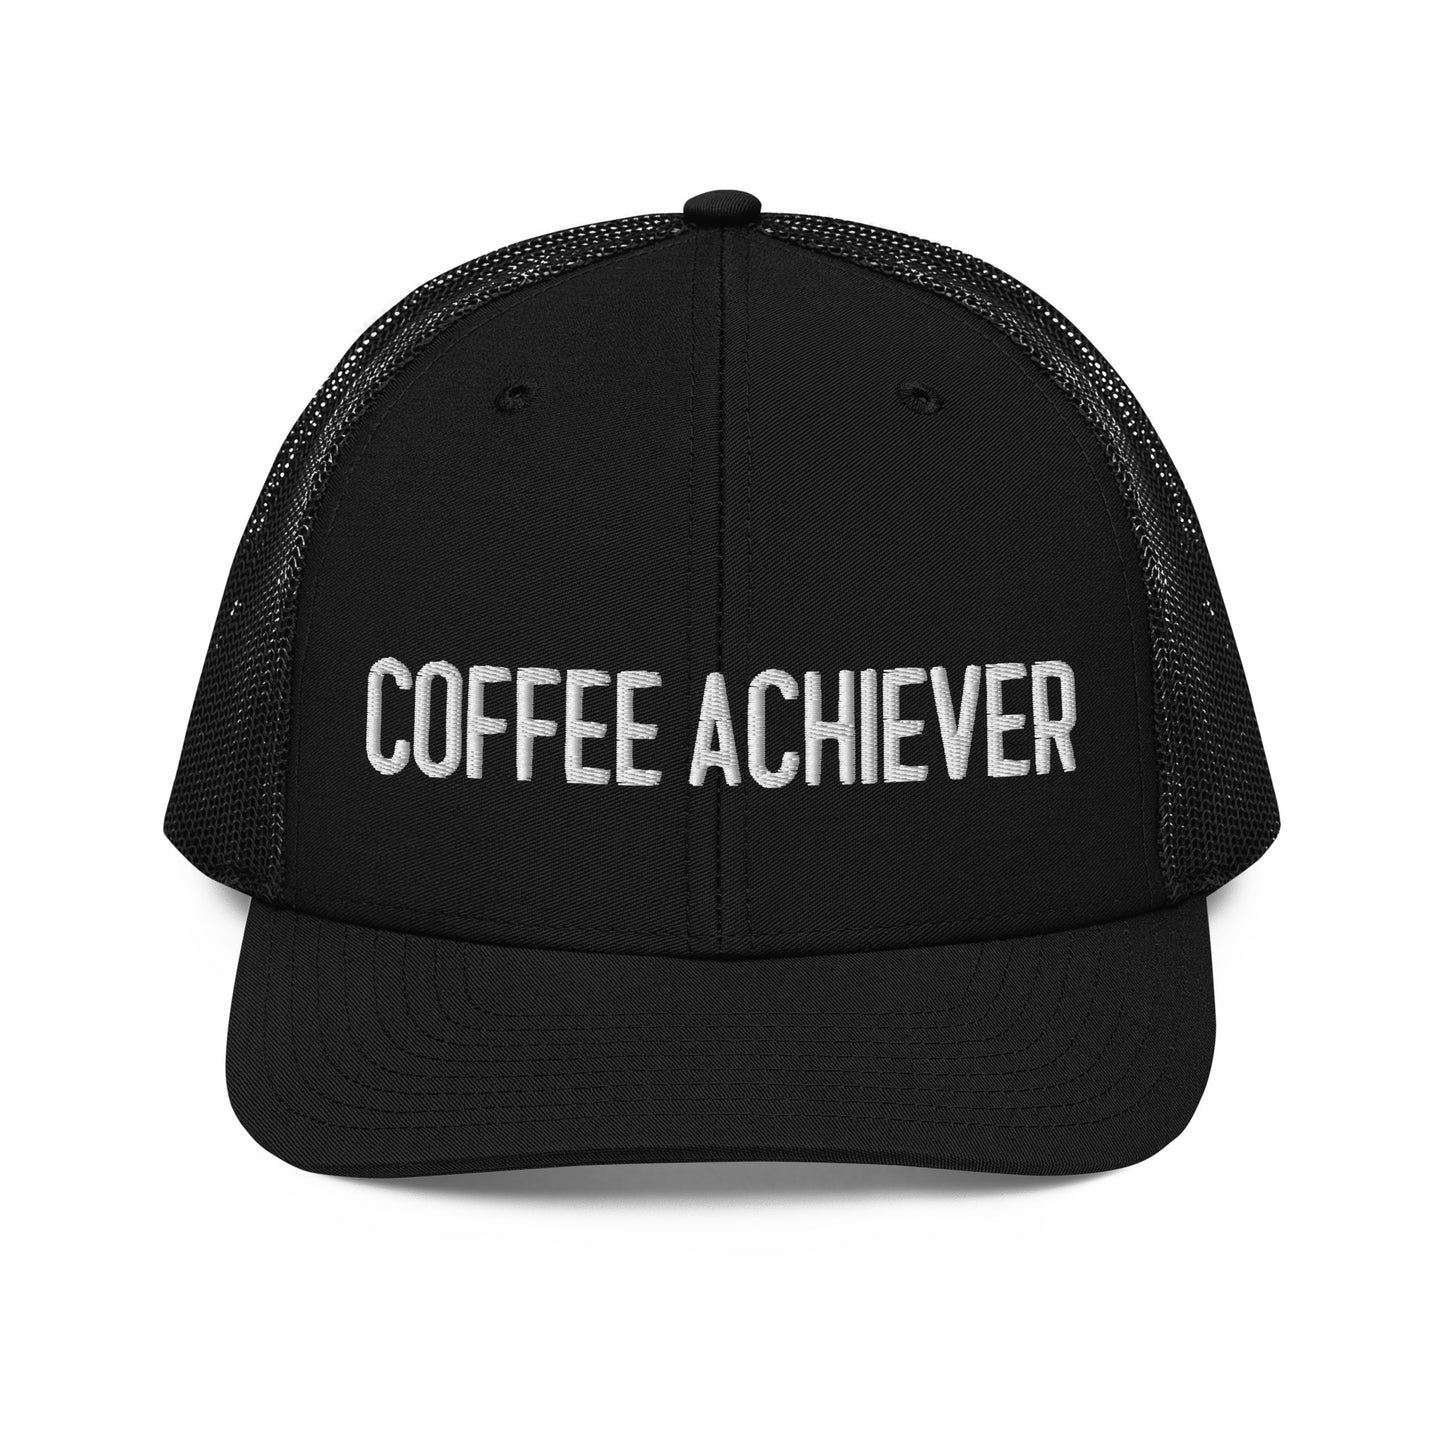 COFFEE ACHIEVER - Trucker Cap